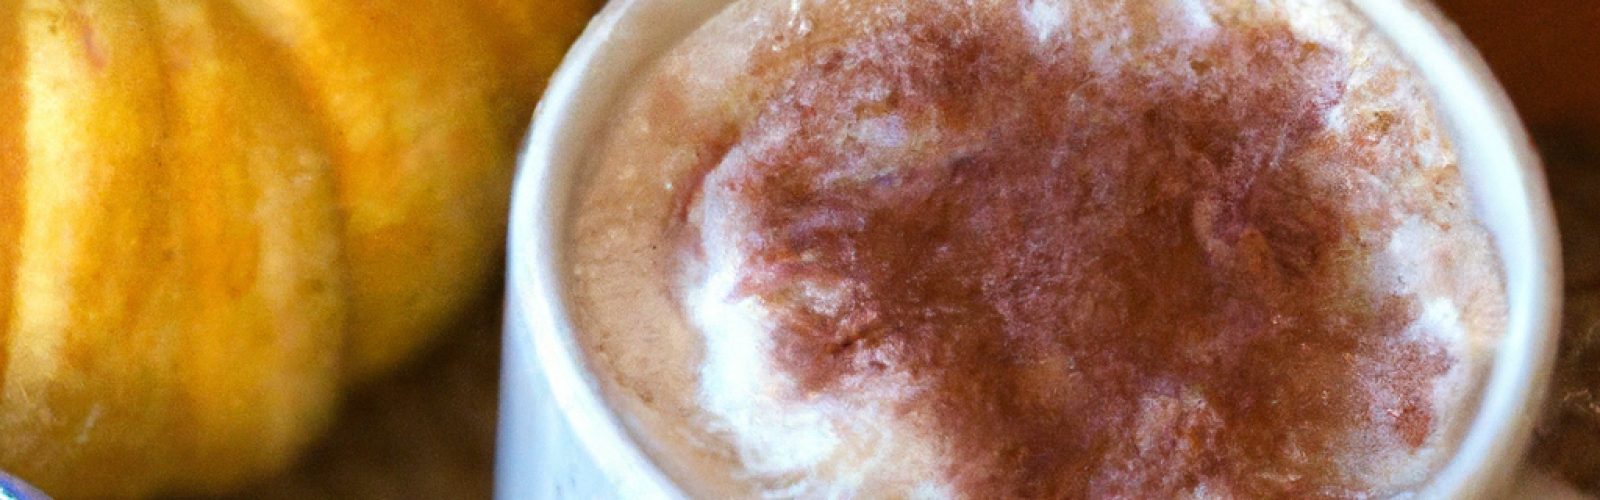 Keto-Friendly Pumpkin Spice Latte Recipe: Easy DIY without Pumpkin Puree